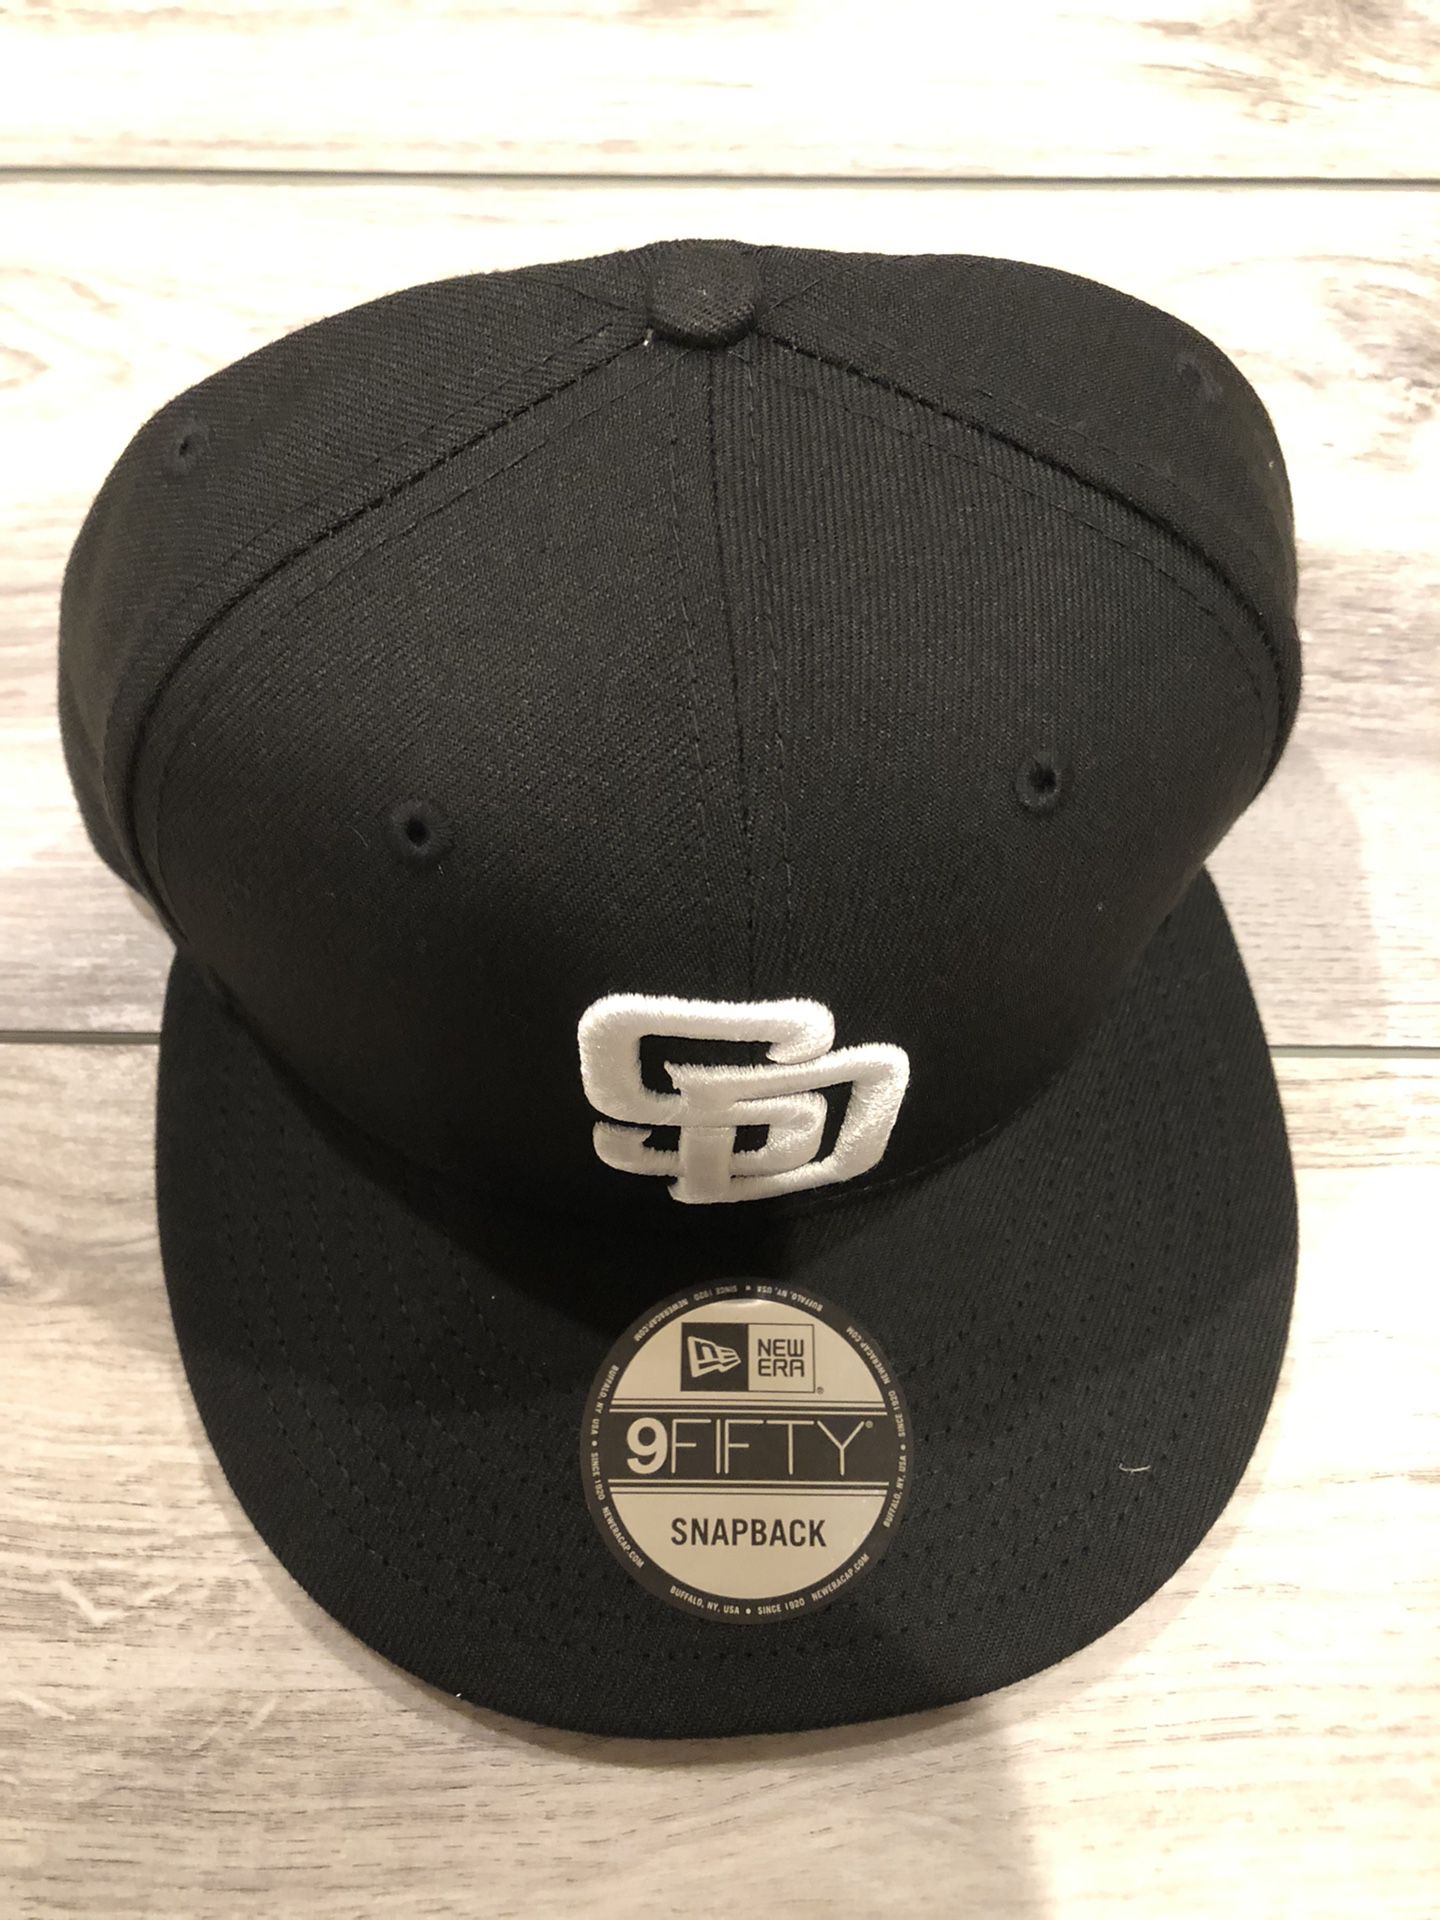 San Diego Padres New era snapback hat 🧢 